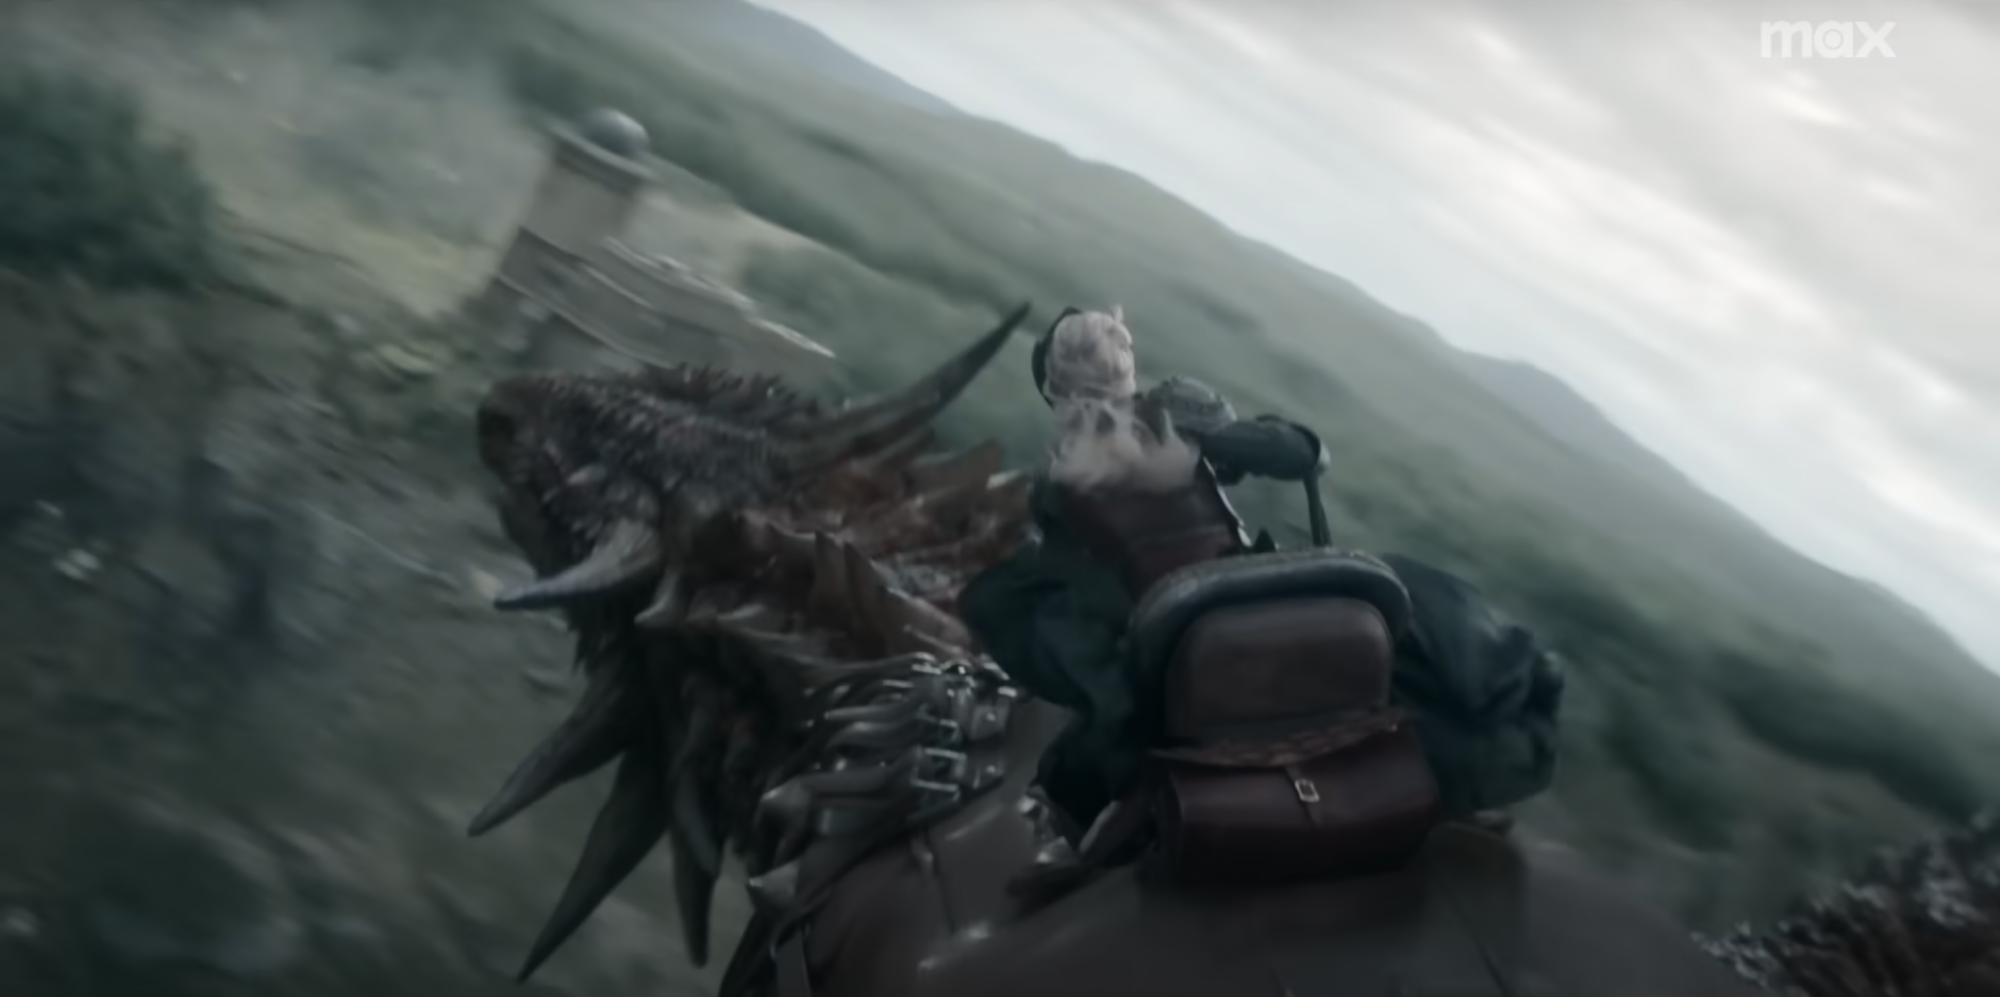 Eve Best as Rhaenys Targaryen rides a spiky red dragon.